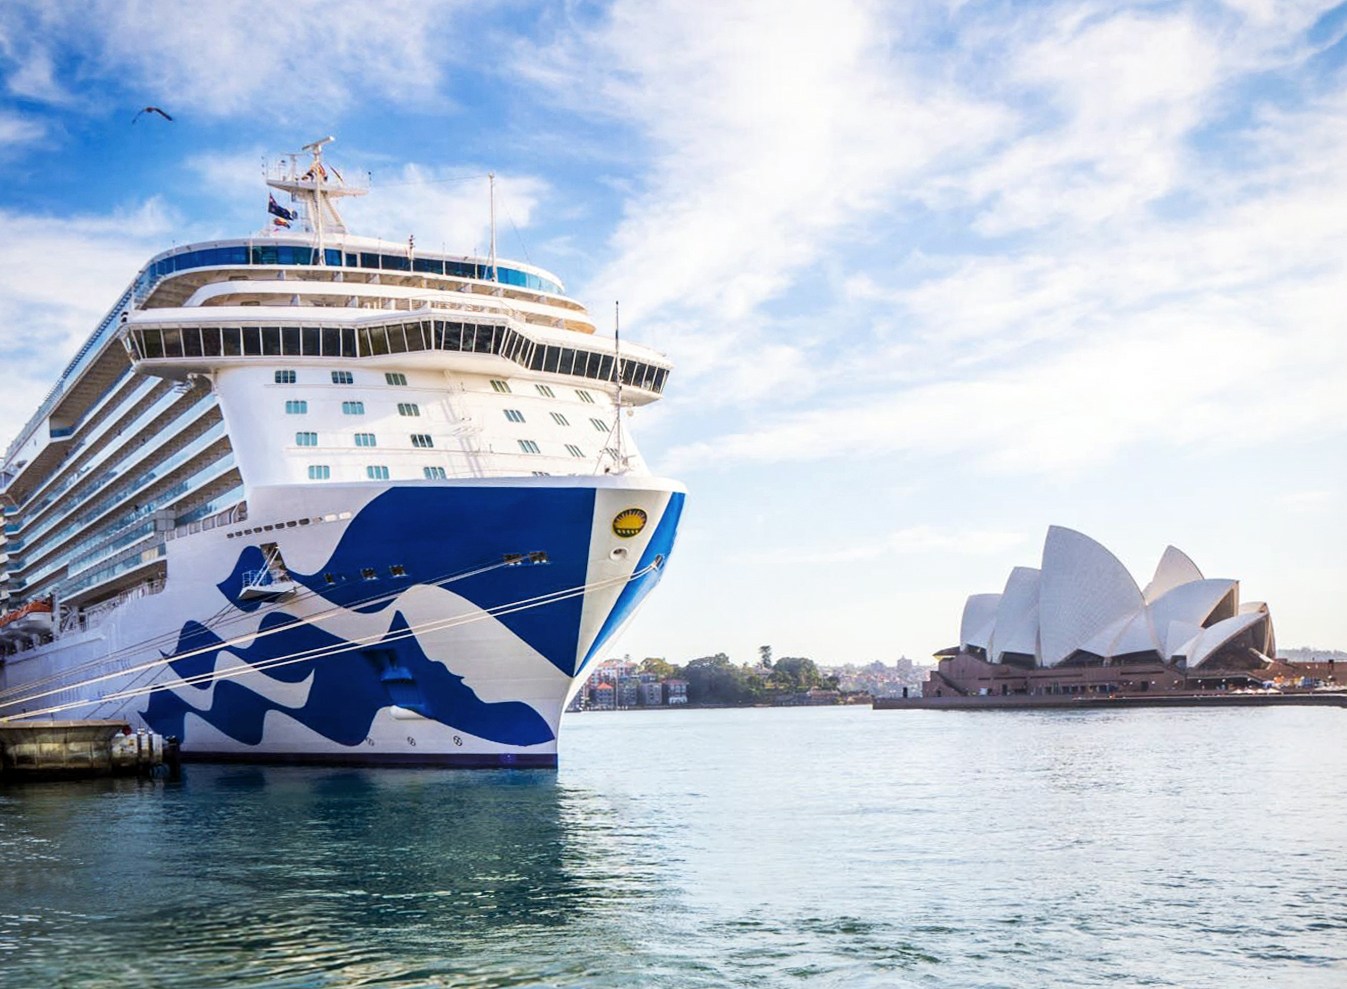 Princess cruise ship in Sydney